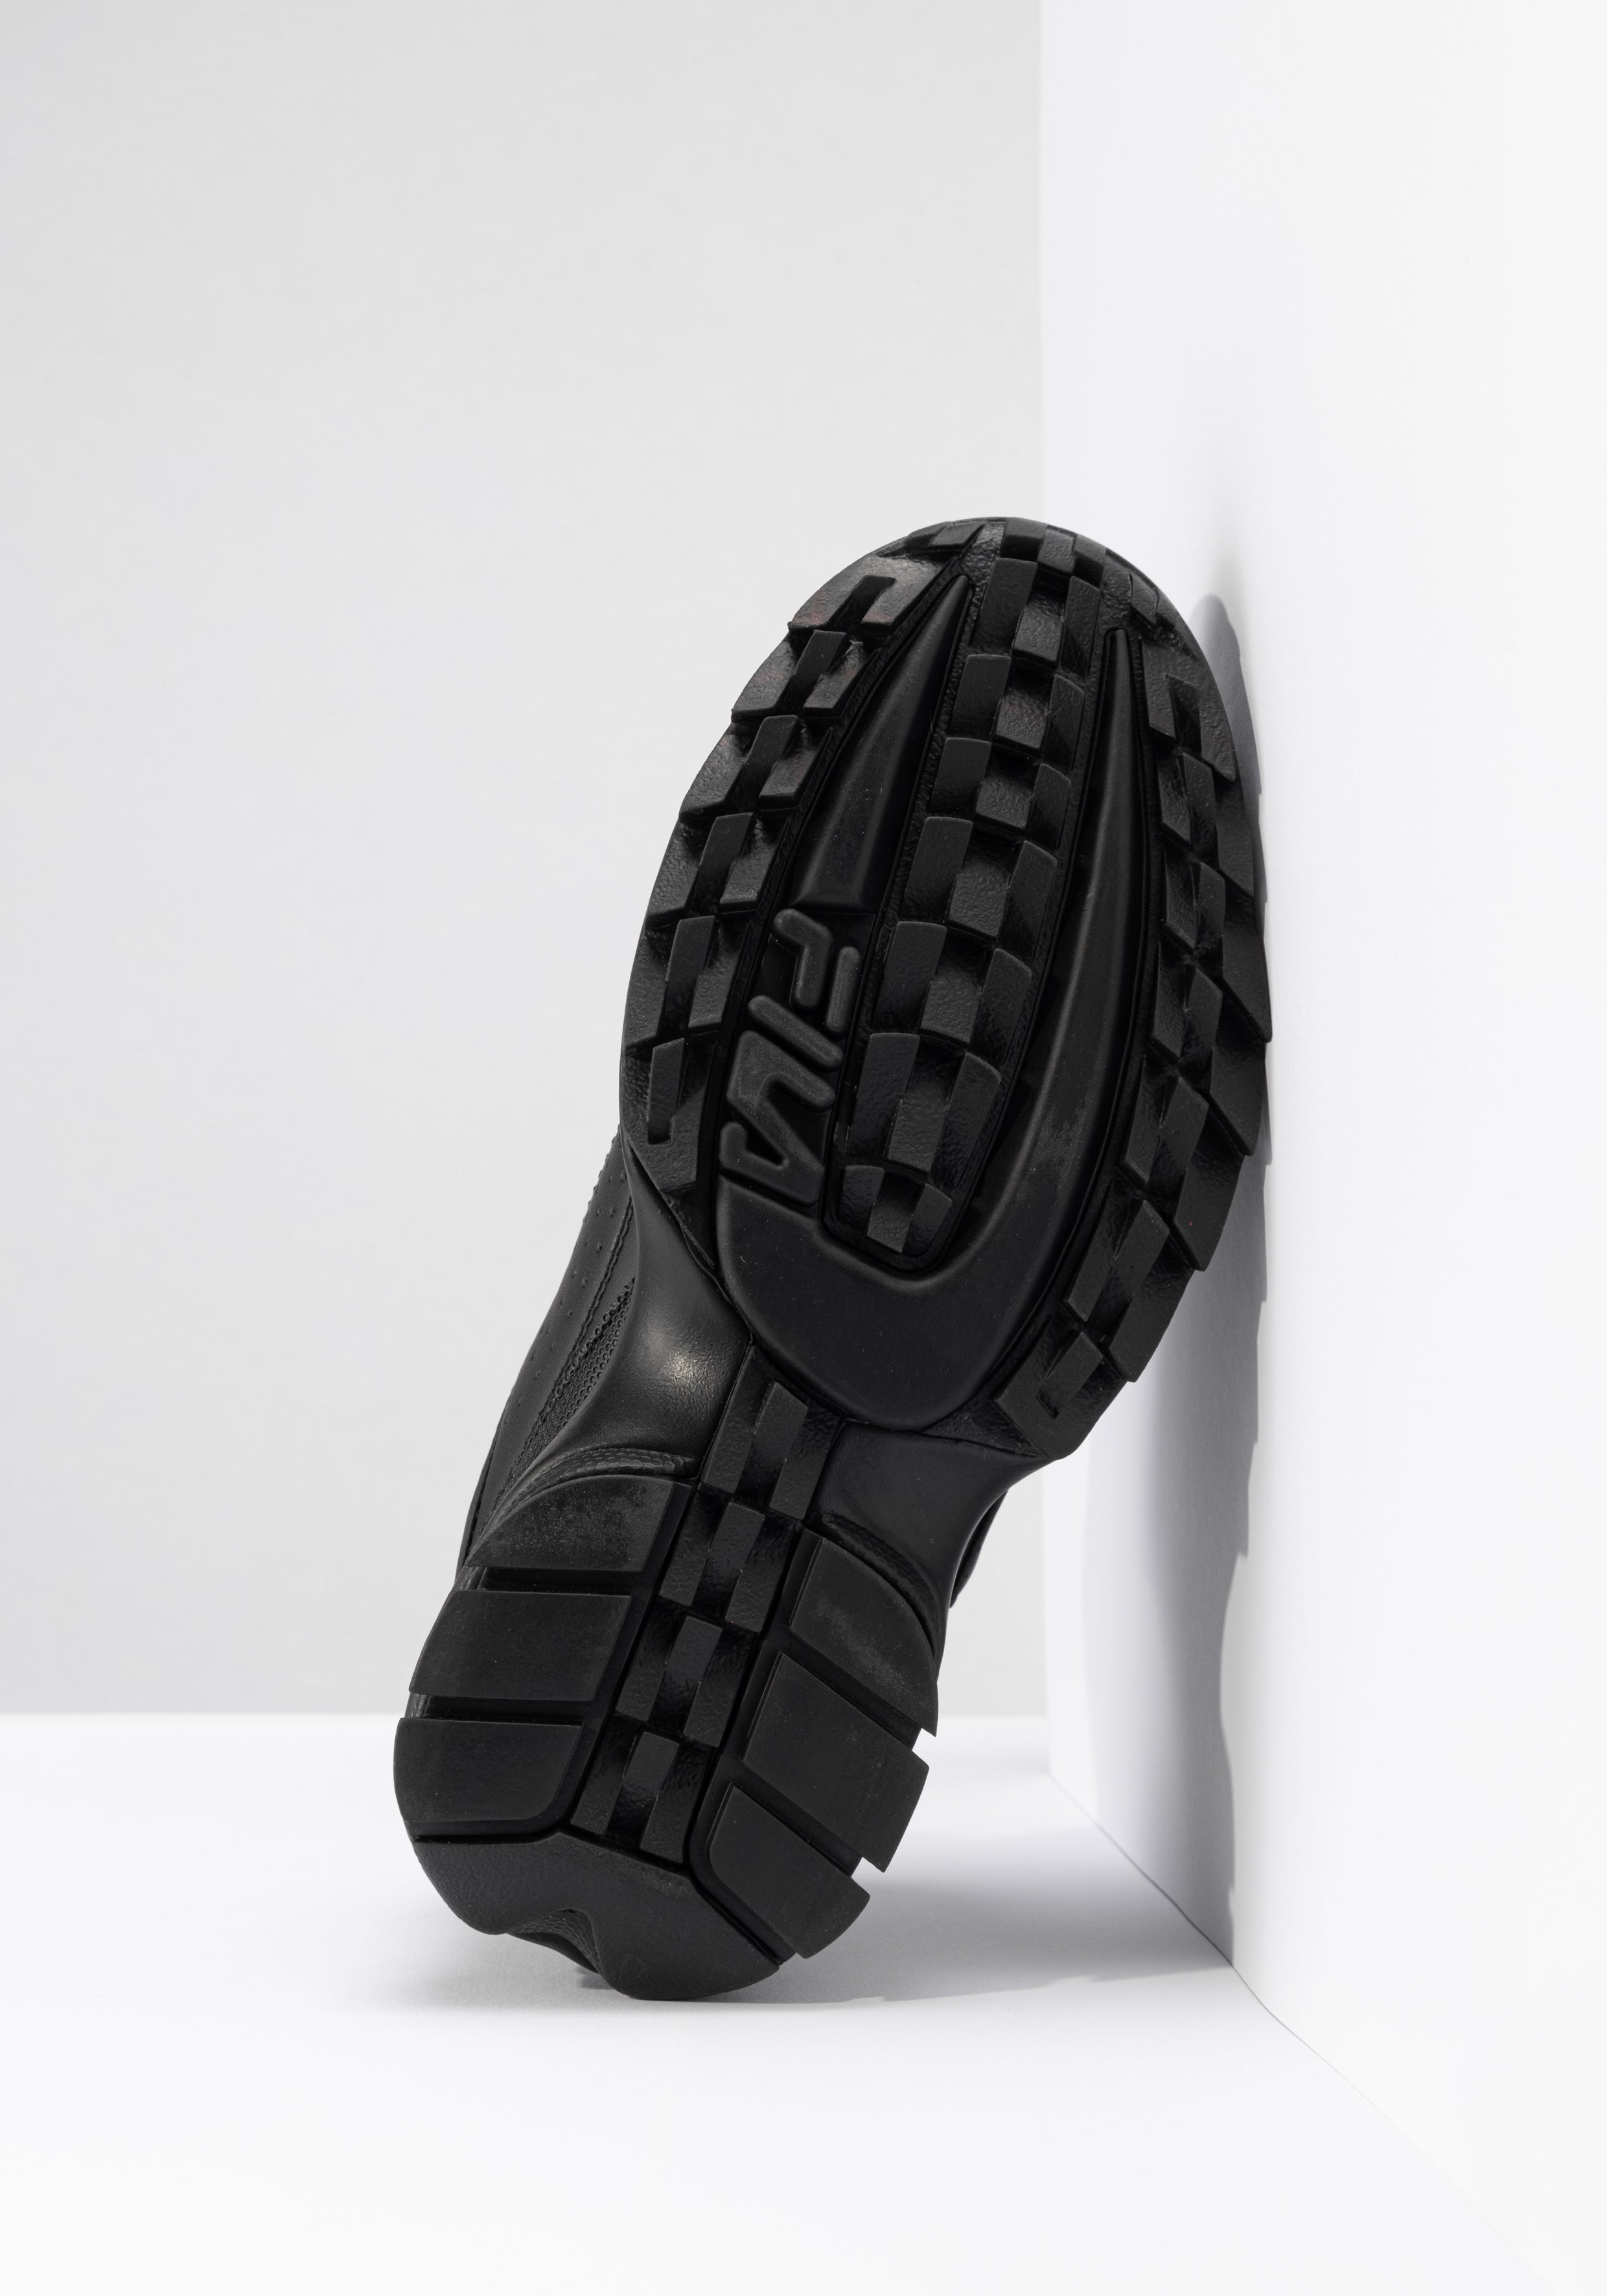 Disruptor Wmn in Black-Black Sneakers Fila   